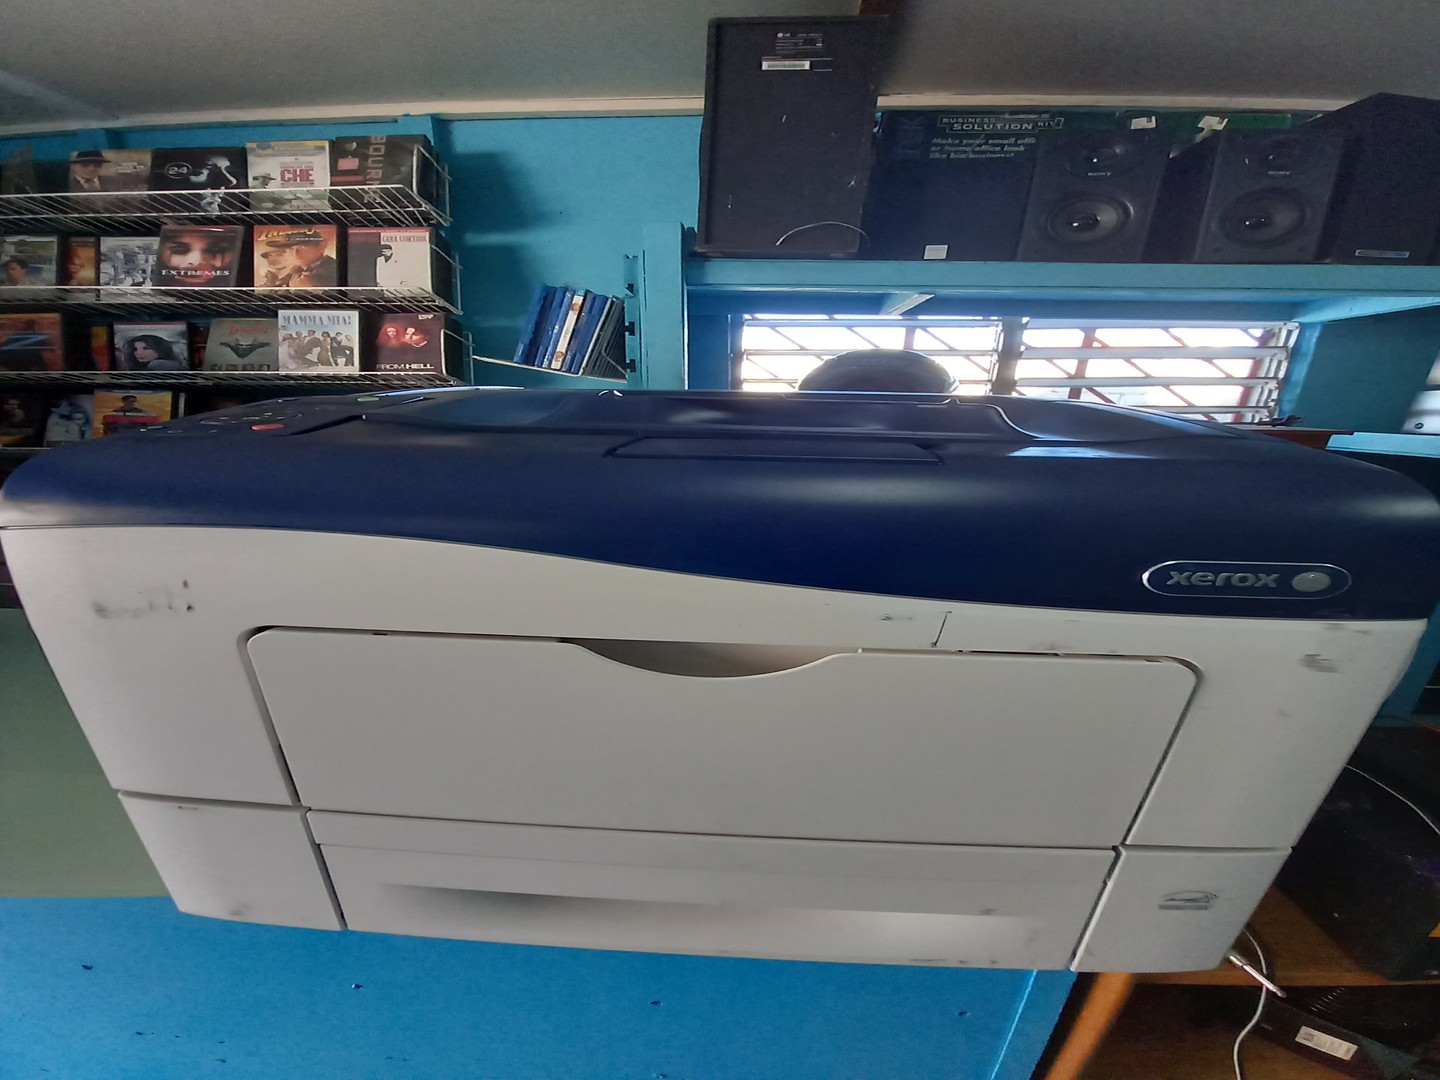 impresoras y scanners - Impresora Xerox Phaser 6600-c